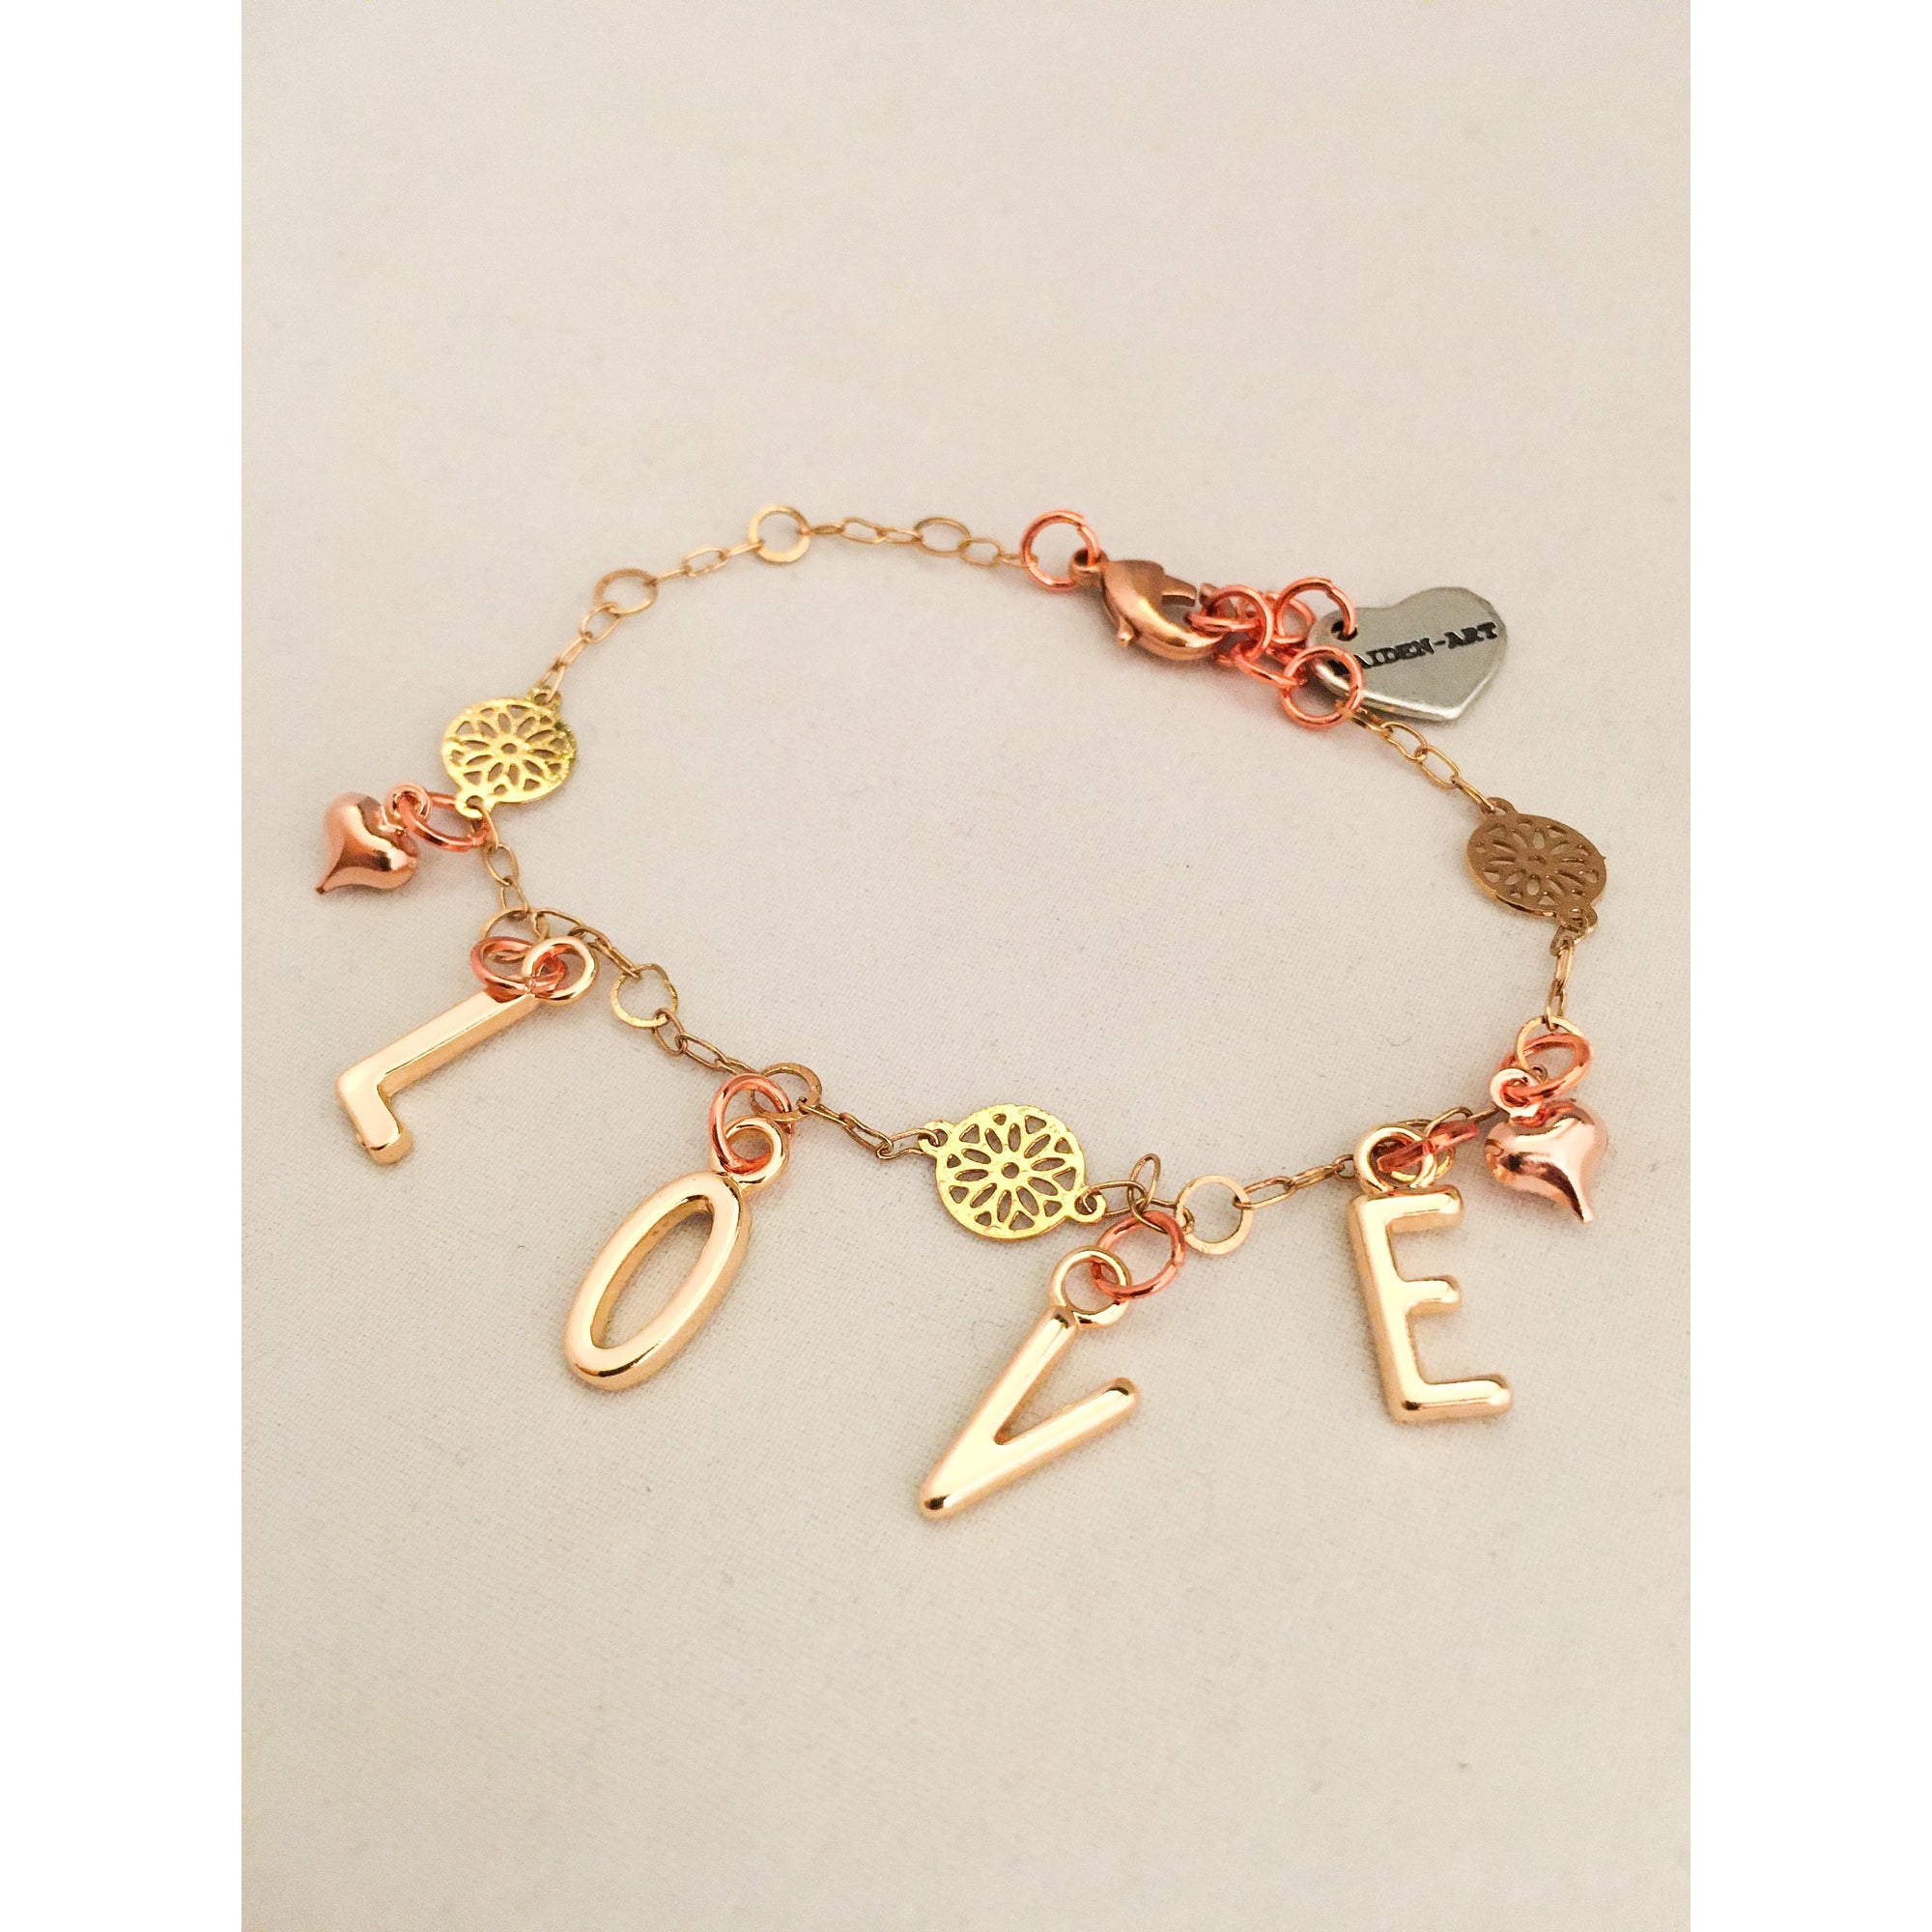 Letter Name Bracelet - Personalized